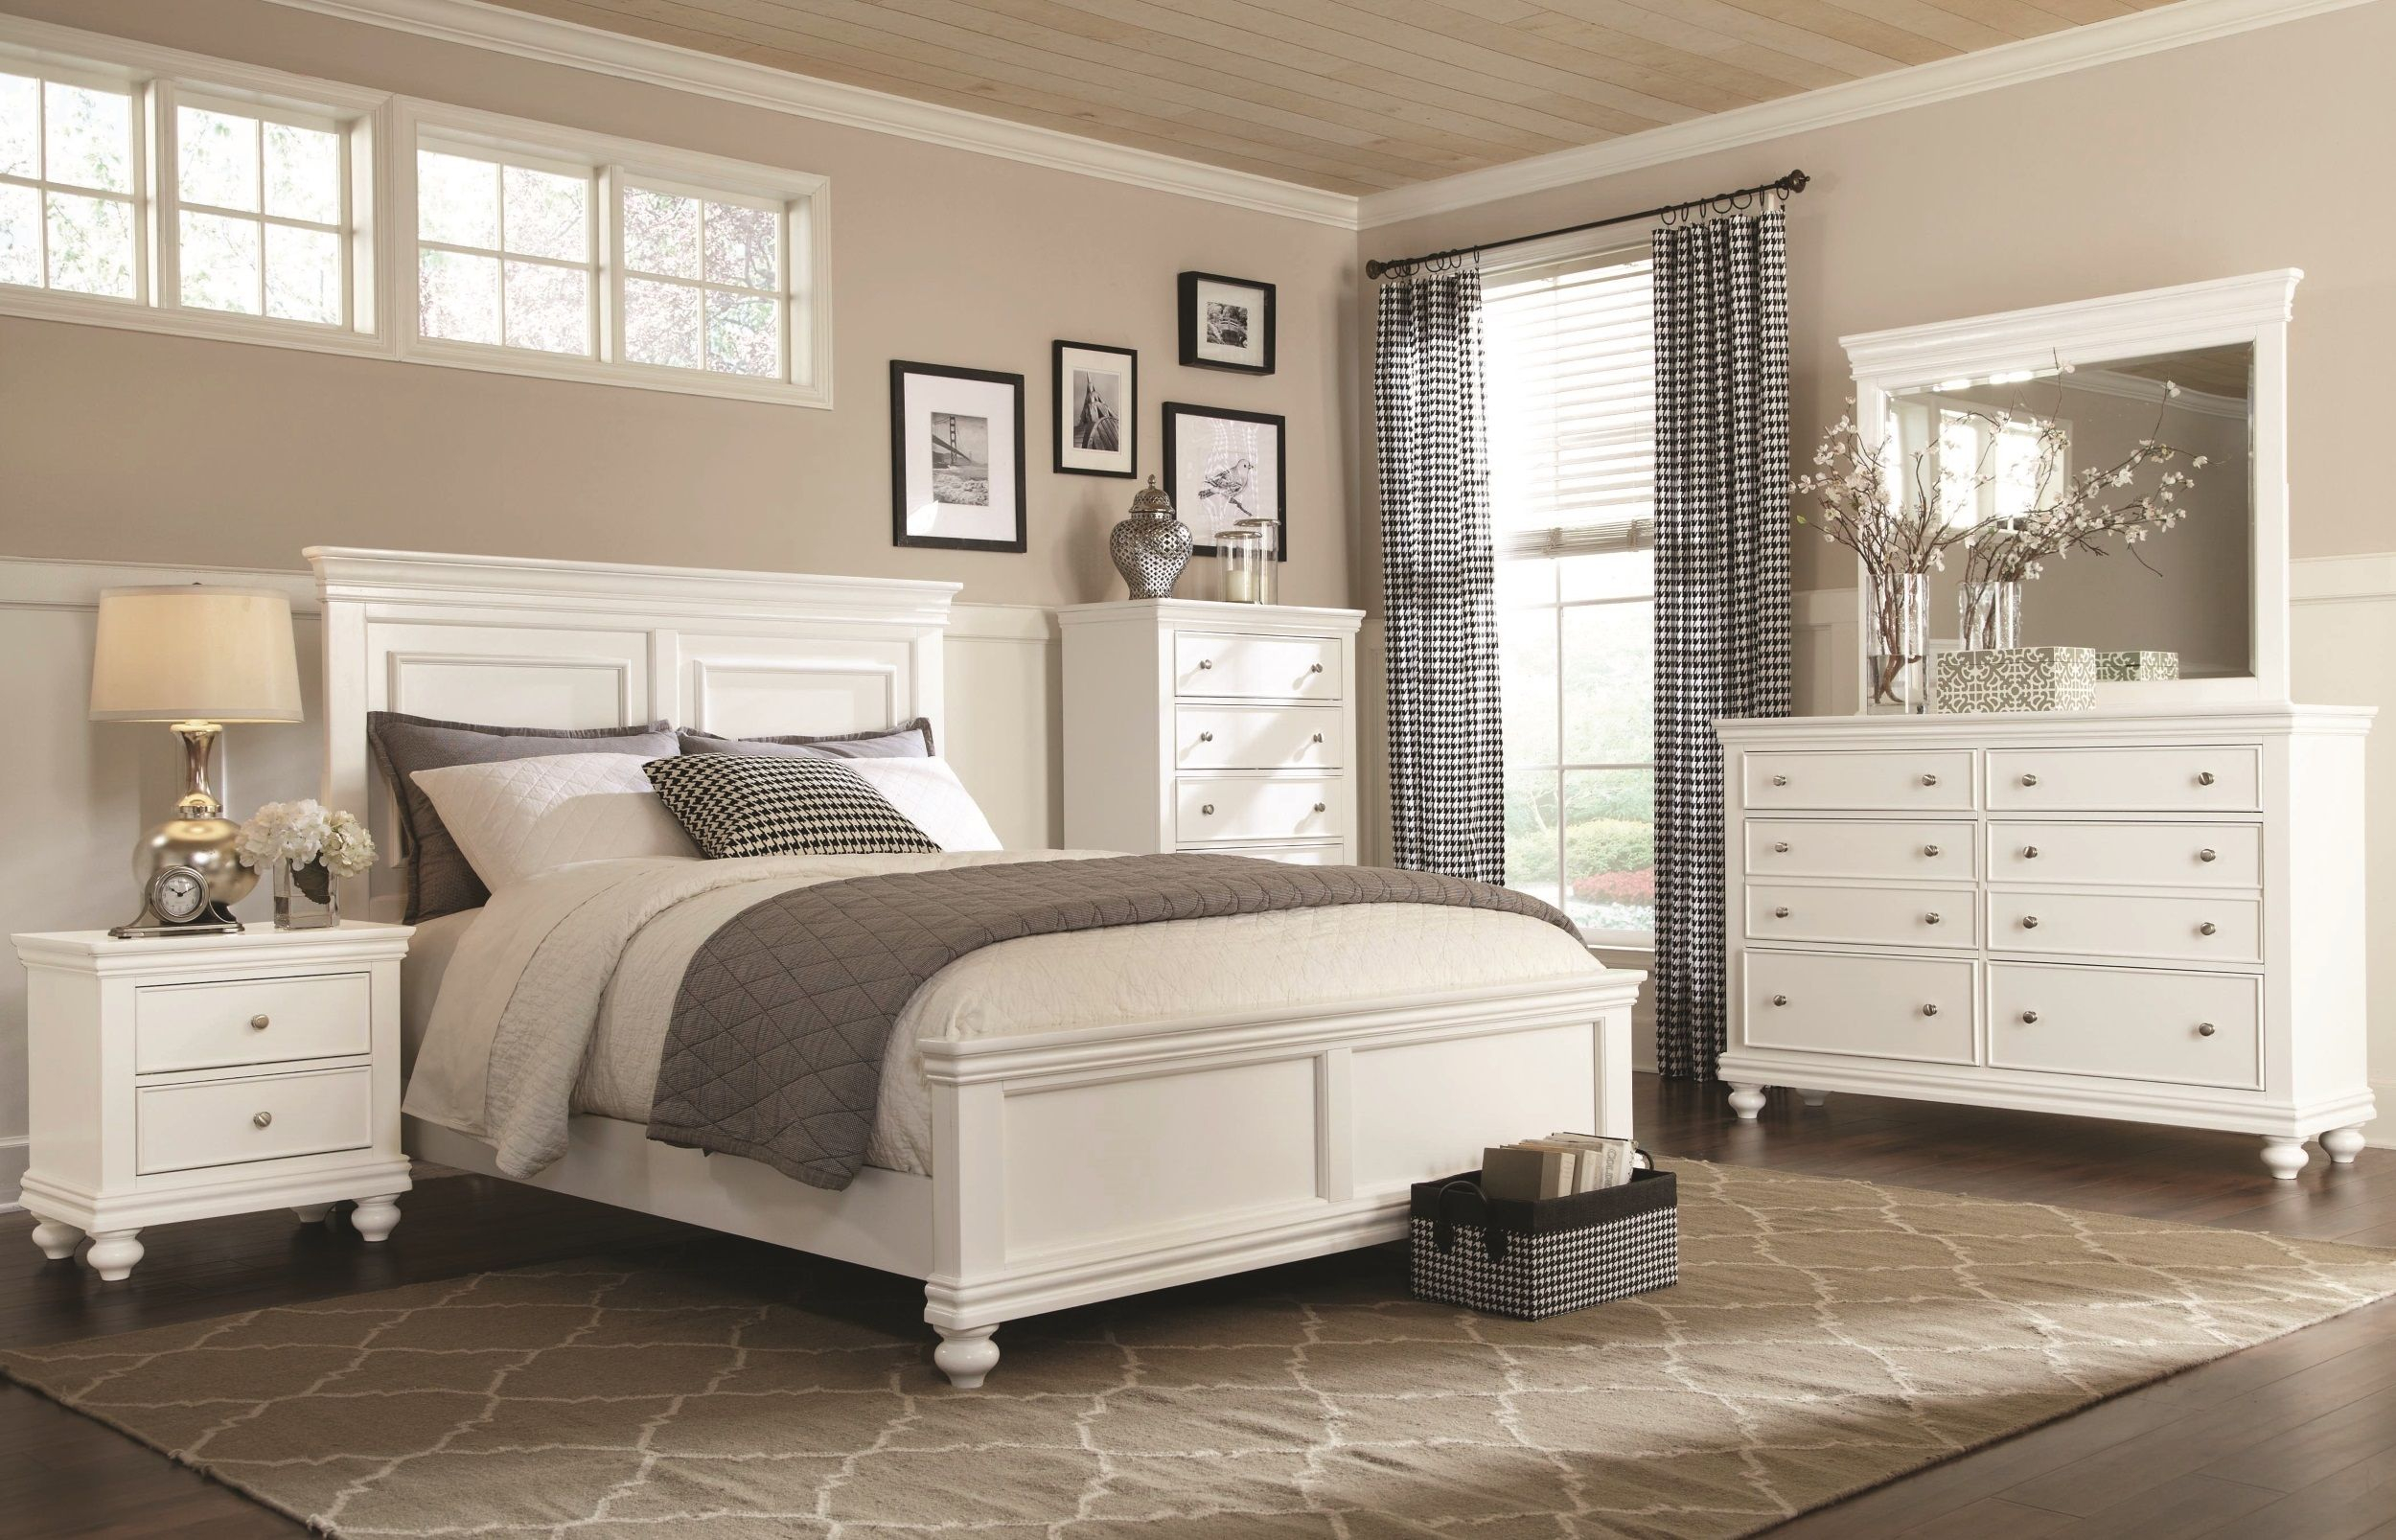 Bedroom Bedroom Bed Beautiful Bedroom Sets King Size Bedroom With throughout measurements 2500 X 1607